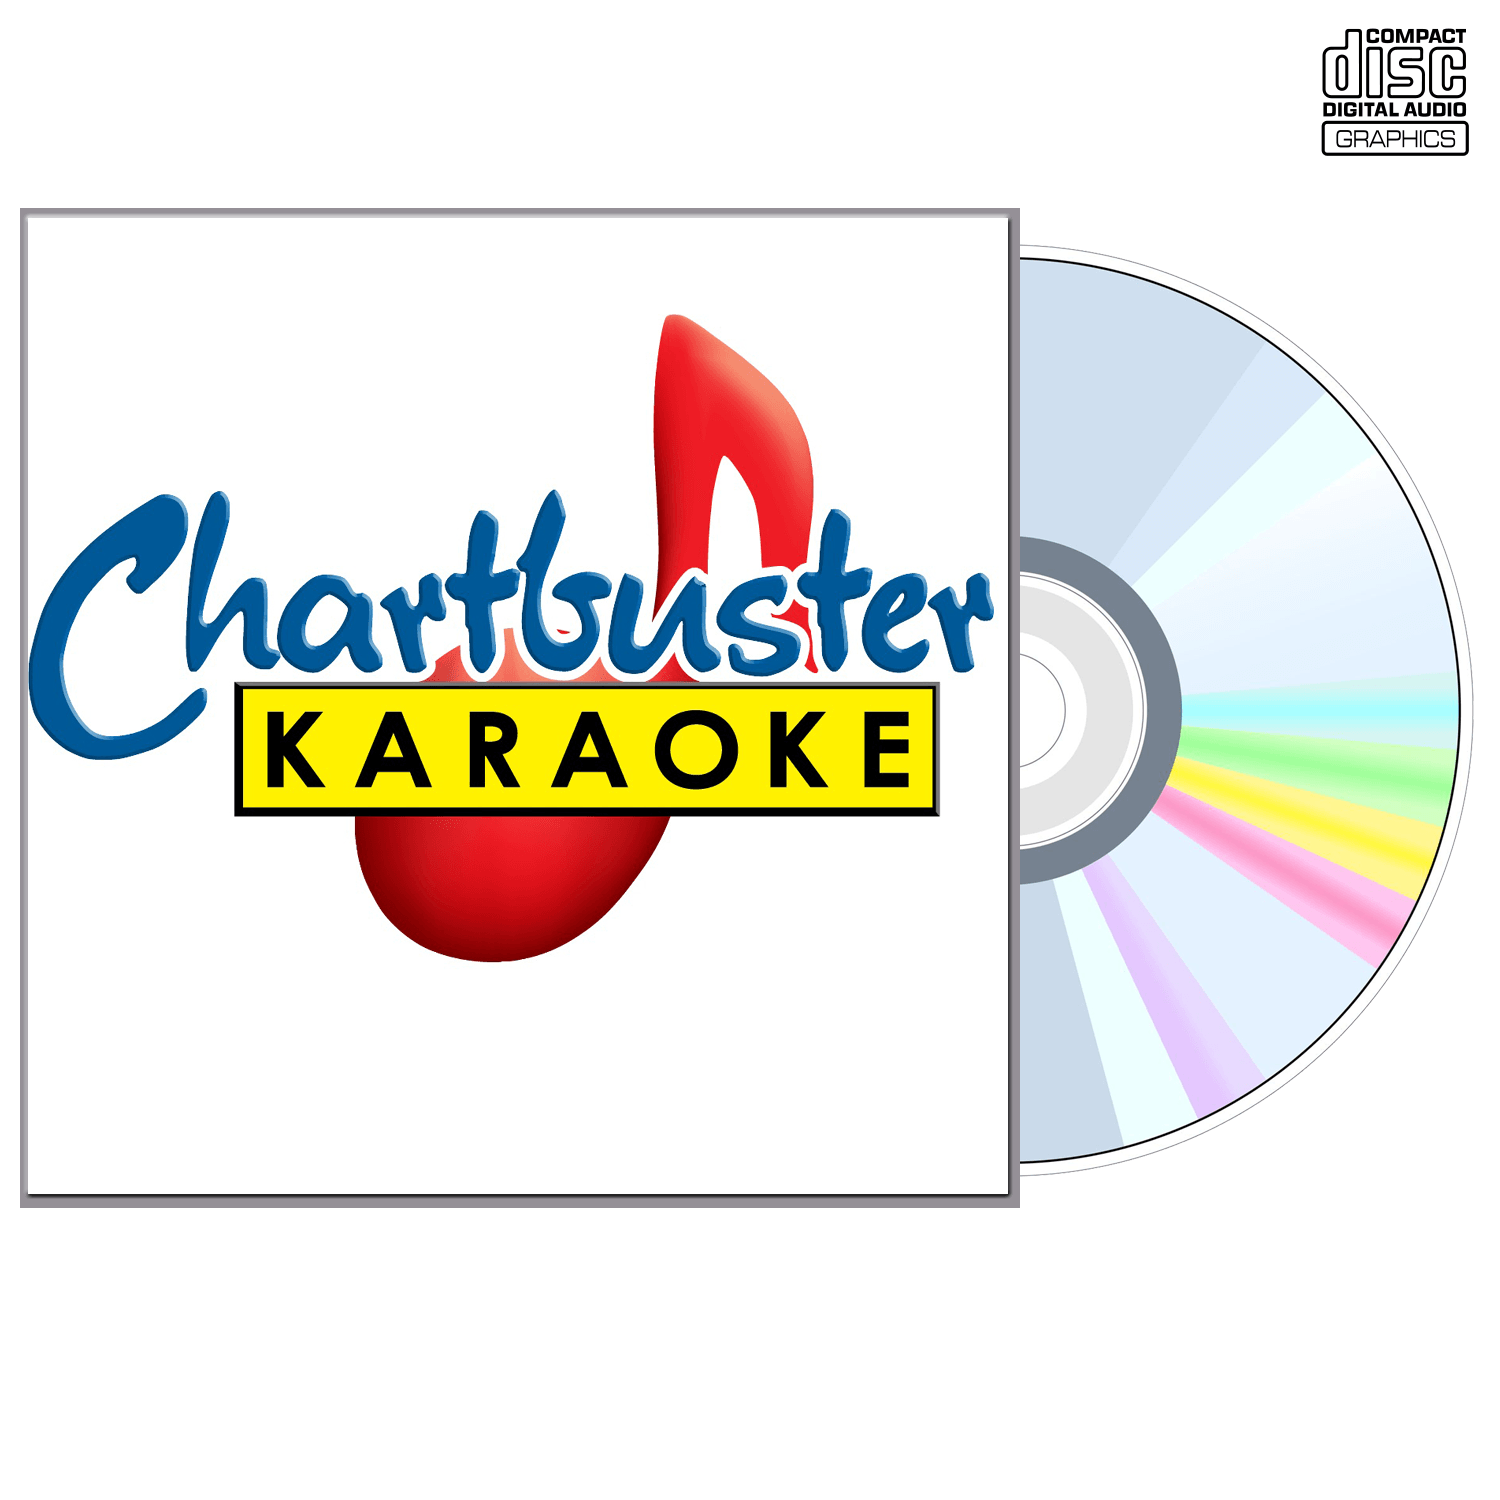 Tony Bennett - CD+G - Chartbuster Karaoke - Karaoke Home Entertainment